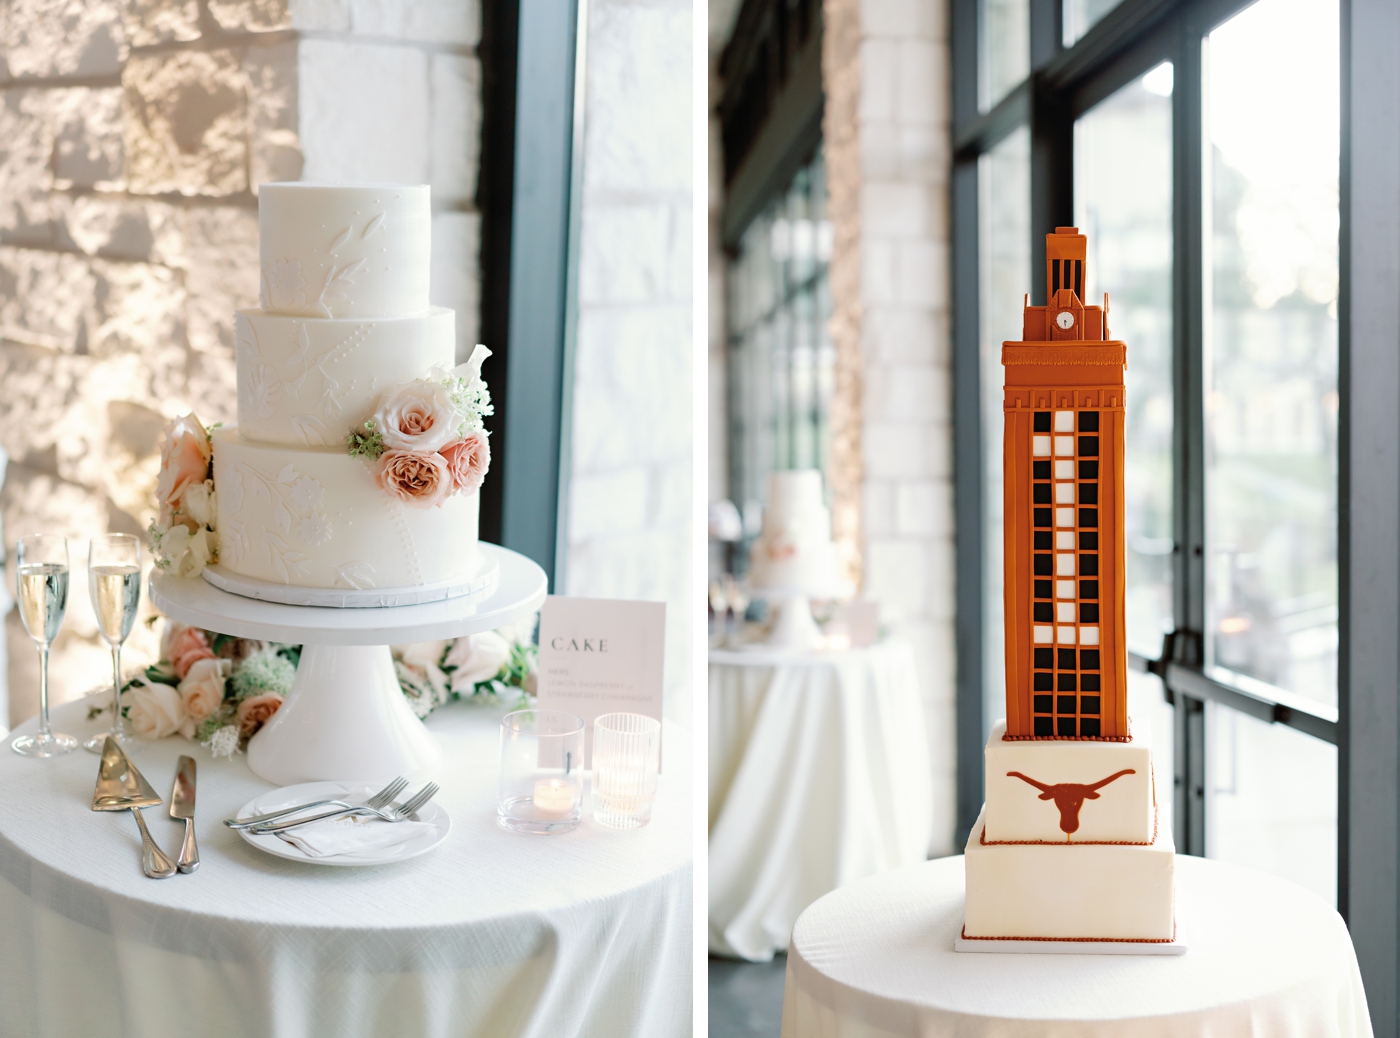 Classic three tier wedding cake next to UT Wedding cake